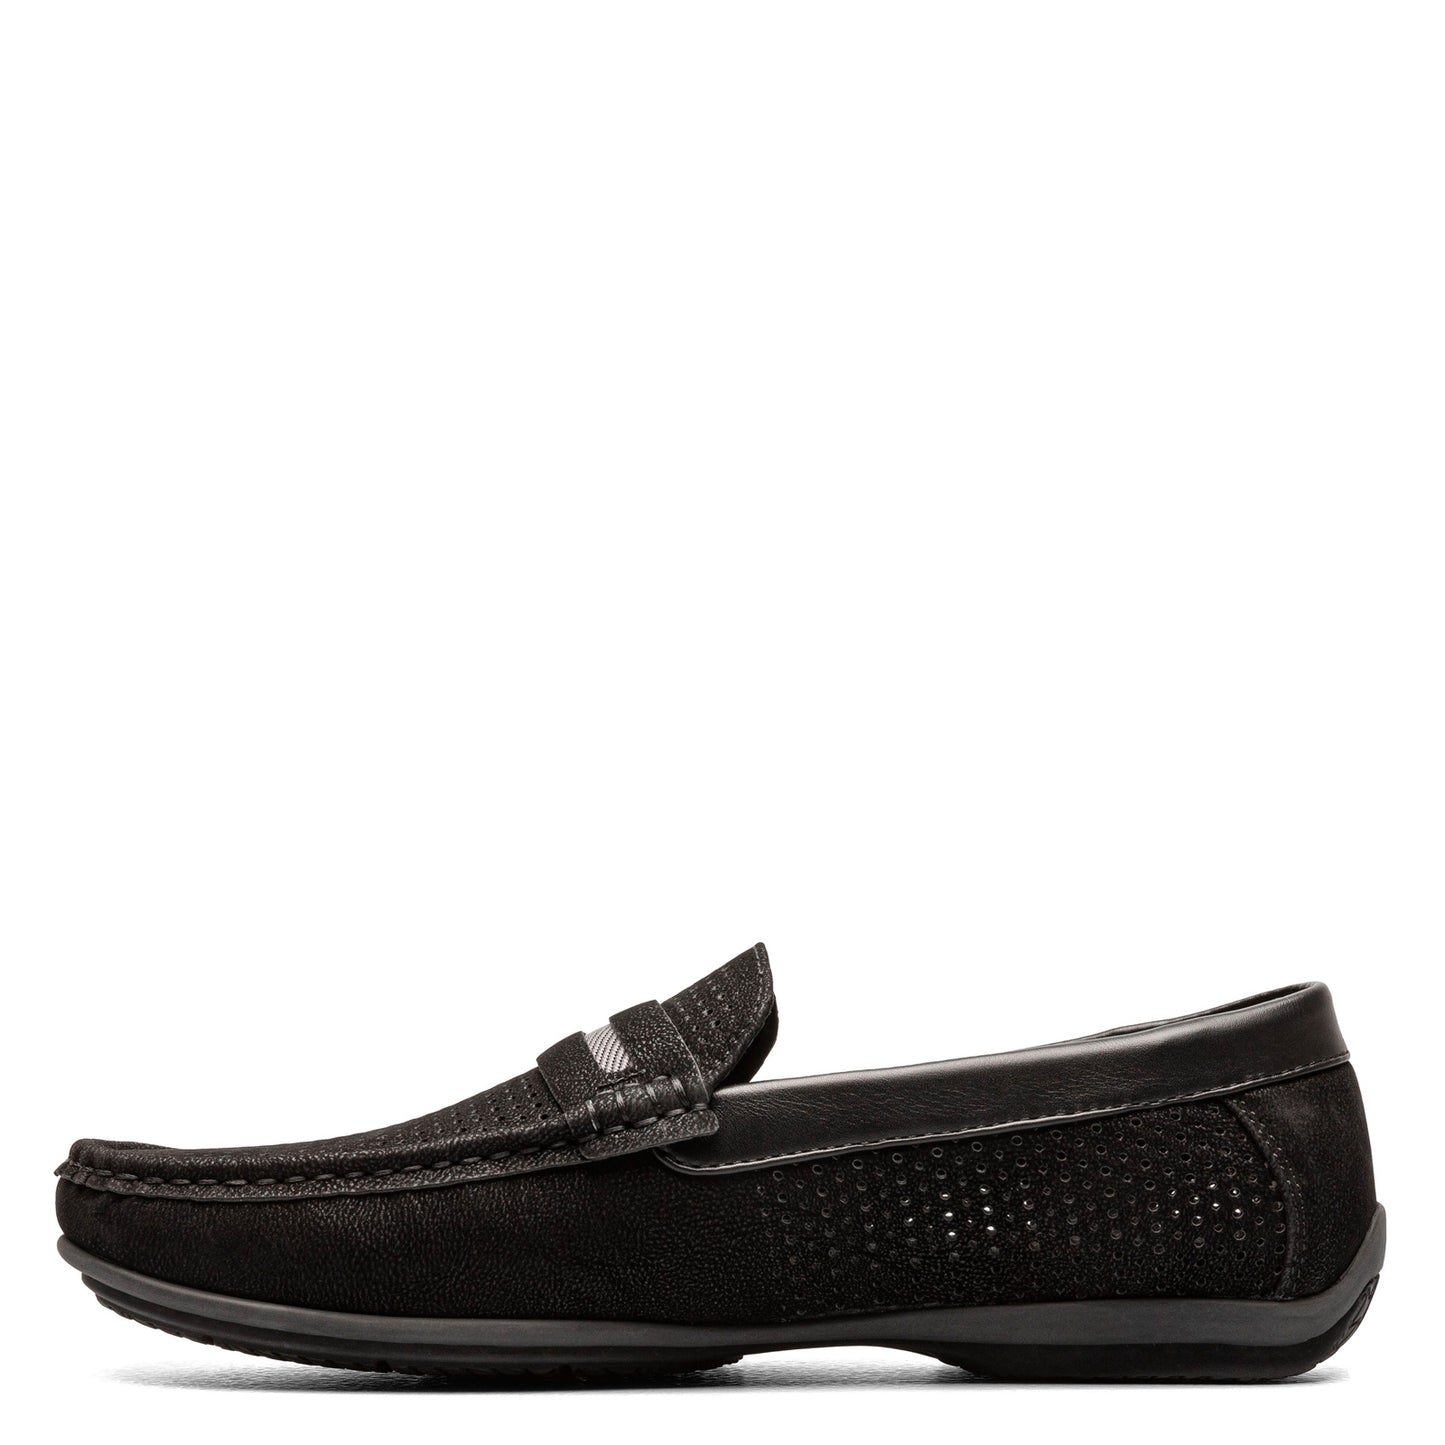 Peltz Shoes  Men's Stacy Adams Corby Loafer BLACK 25513-001